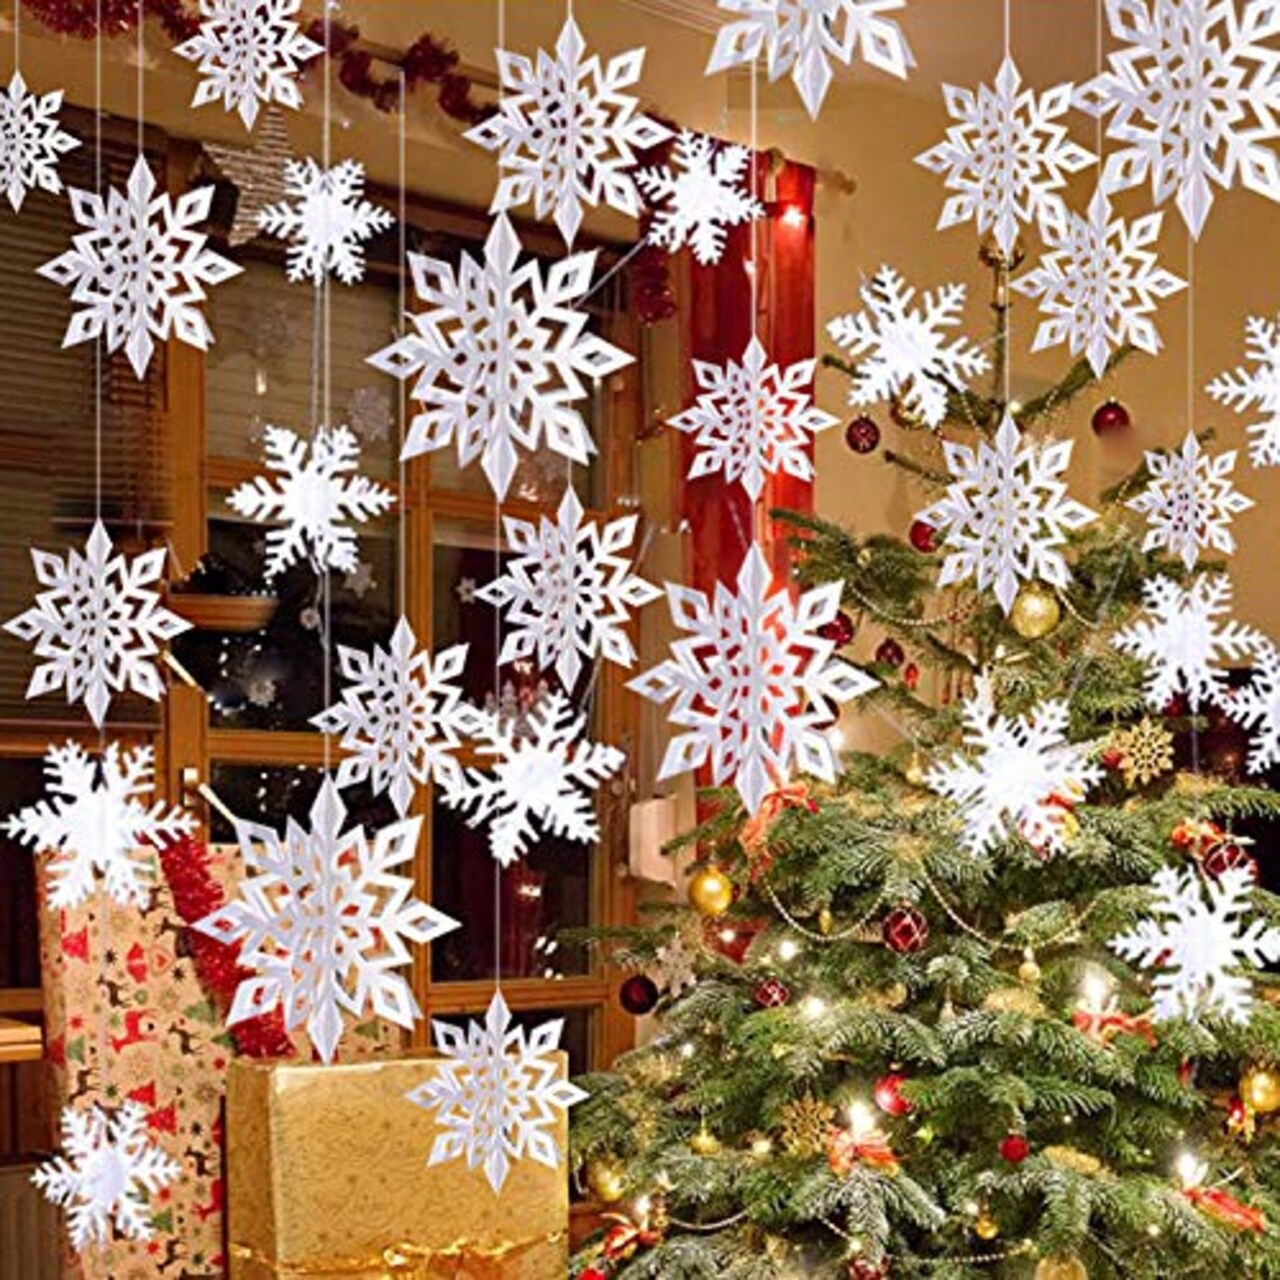 OuMuaMua Winter Christmas Hanging Snowflake Decorations, 12PCS